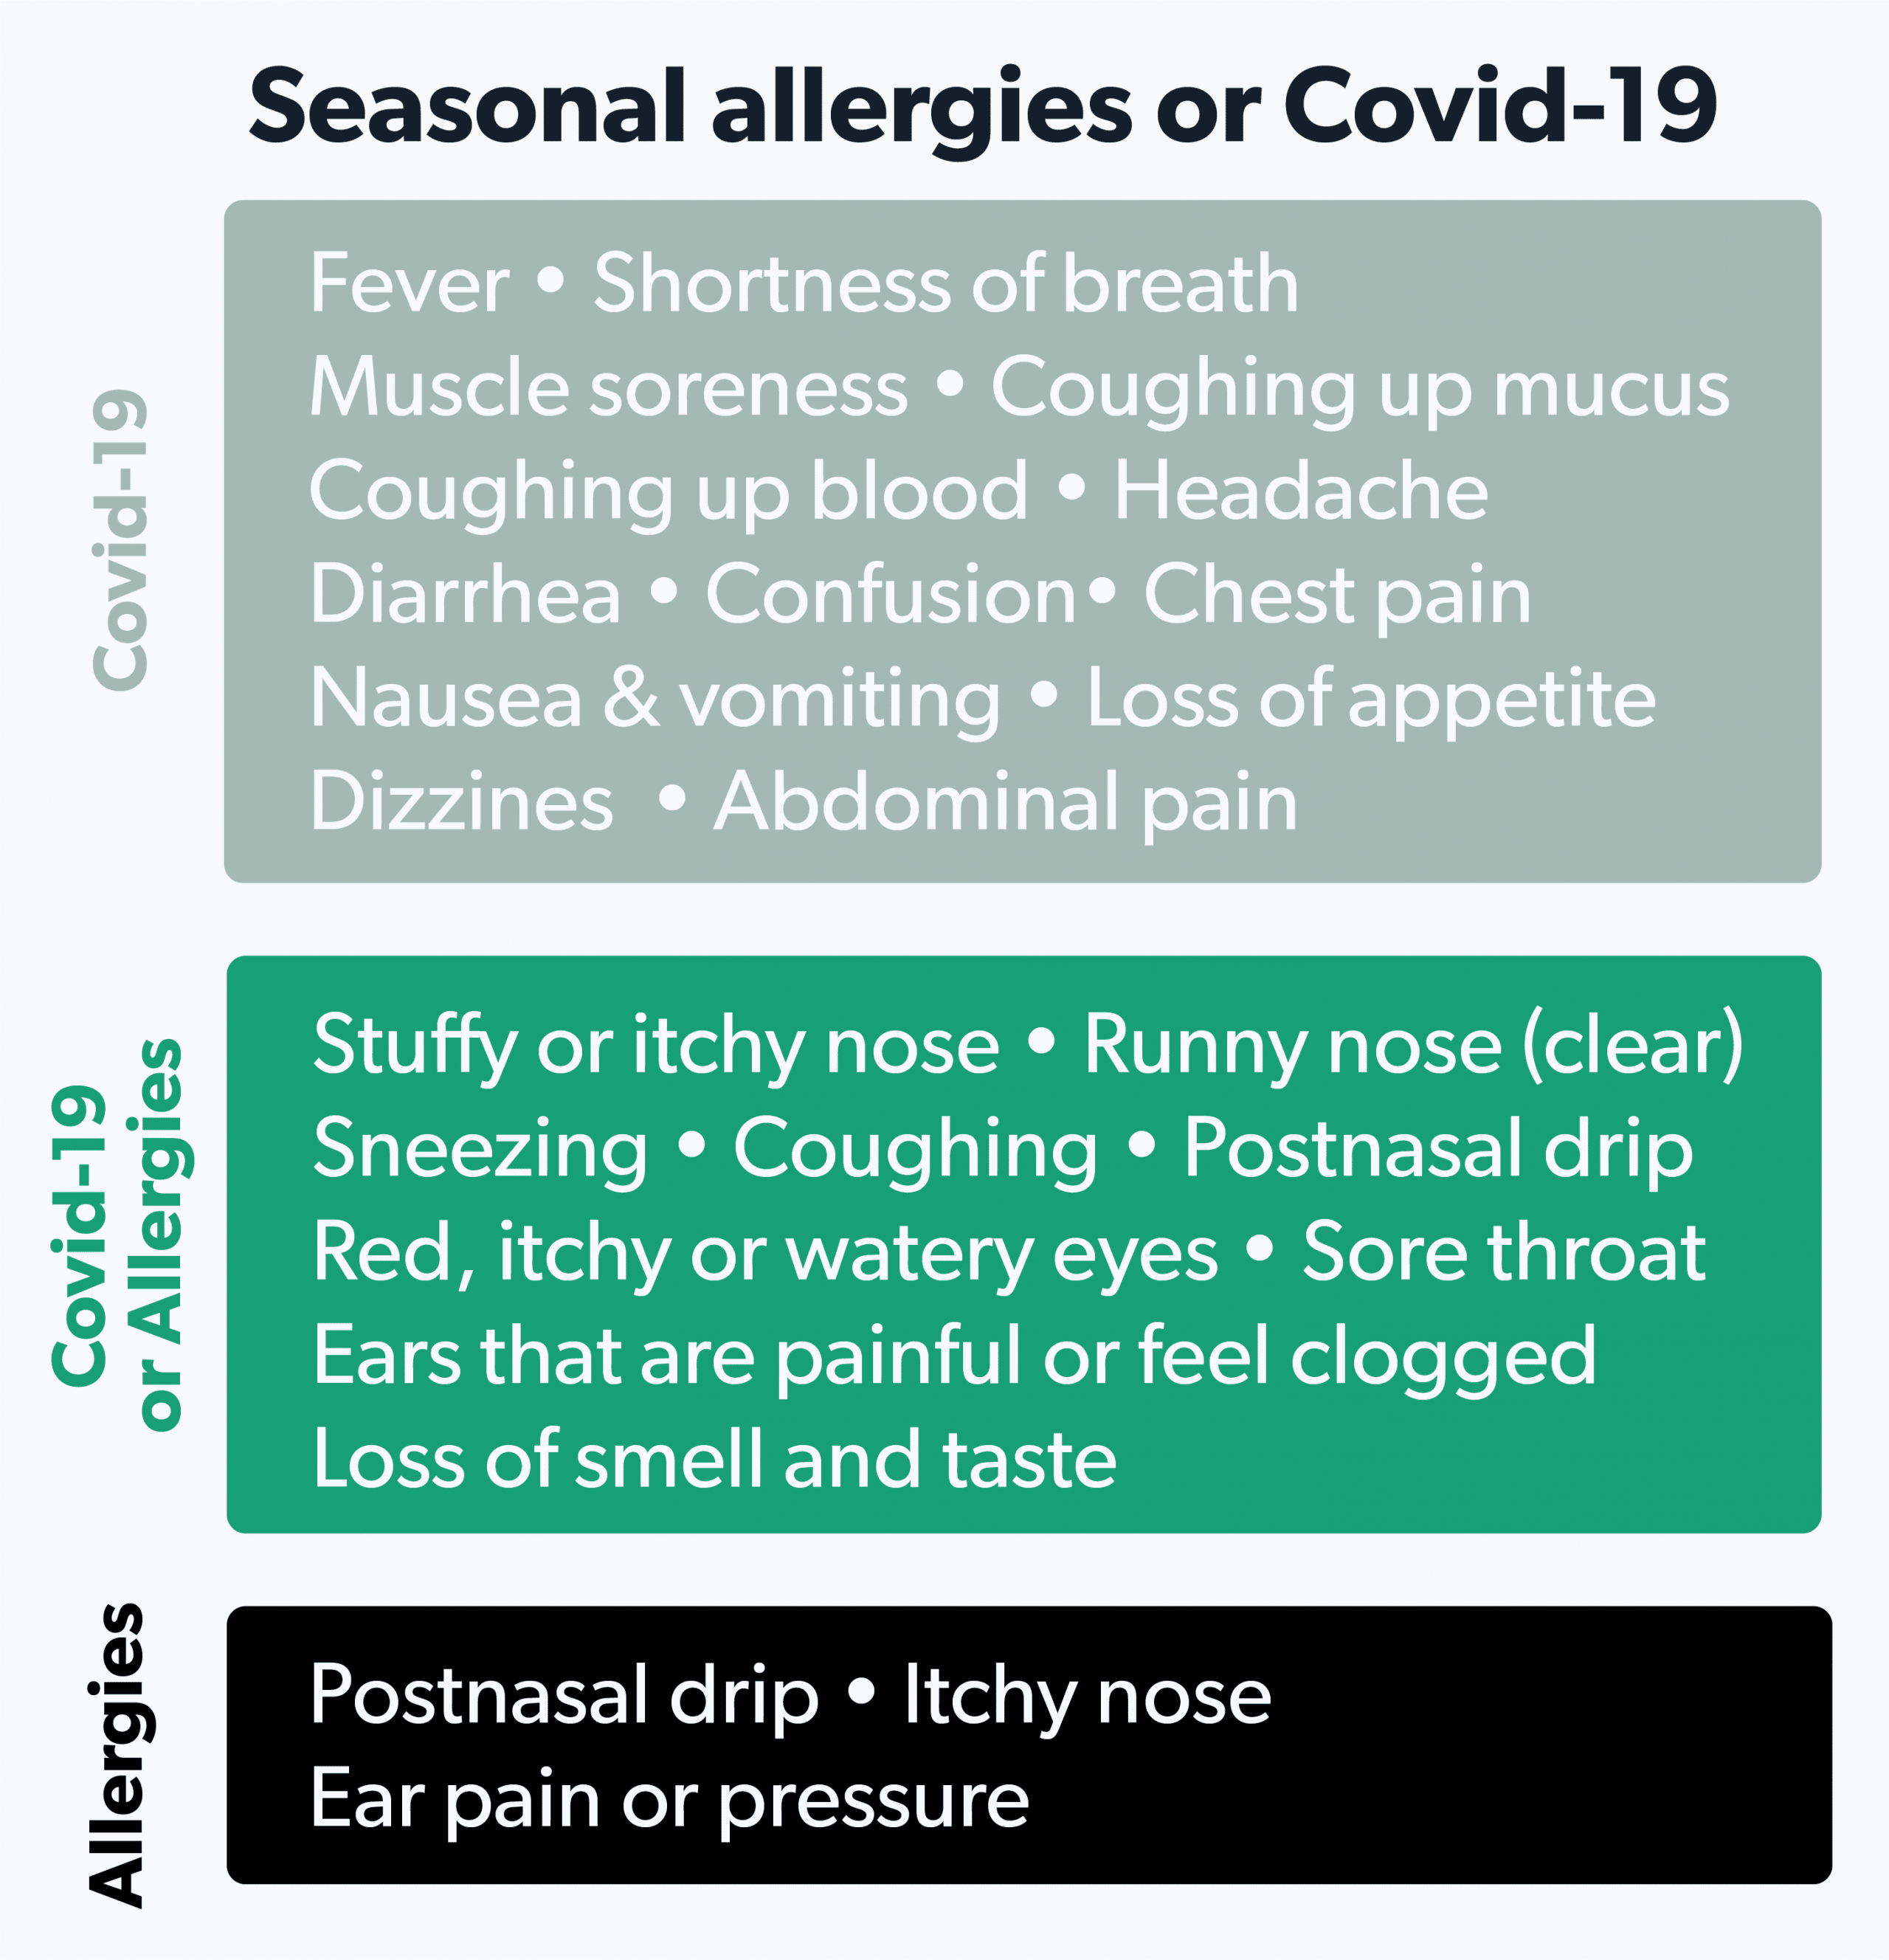 Allergies vs. COVID